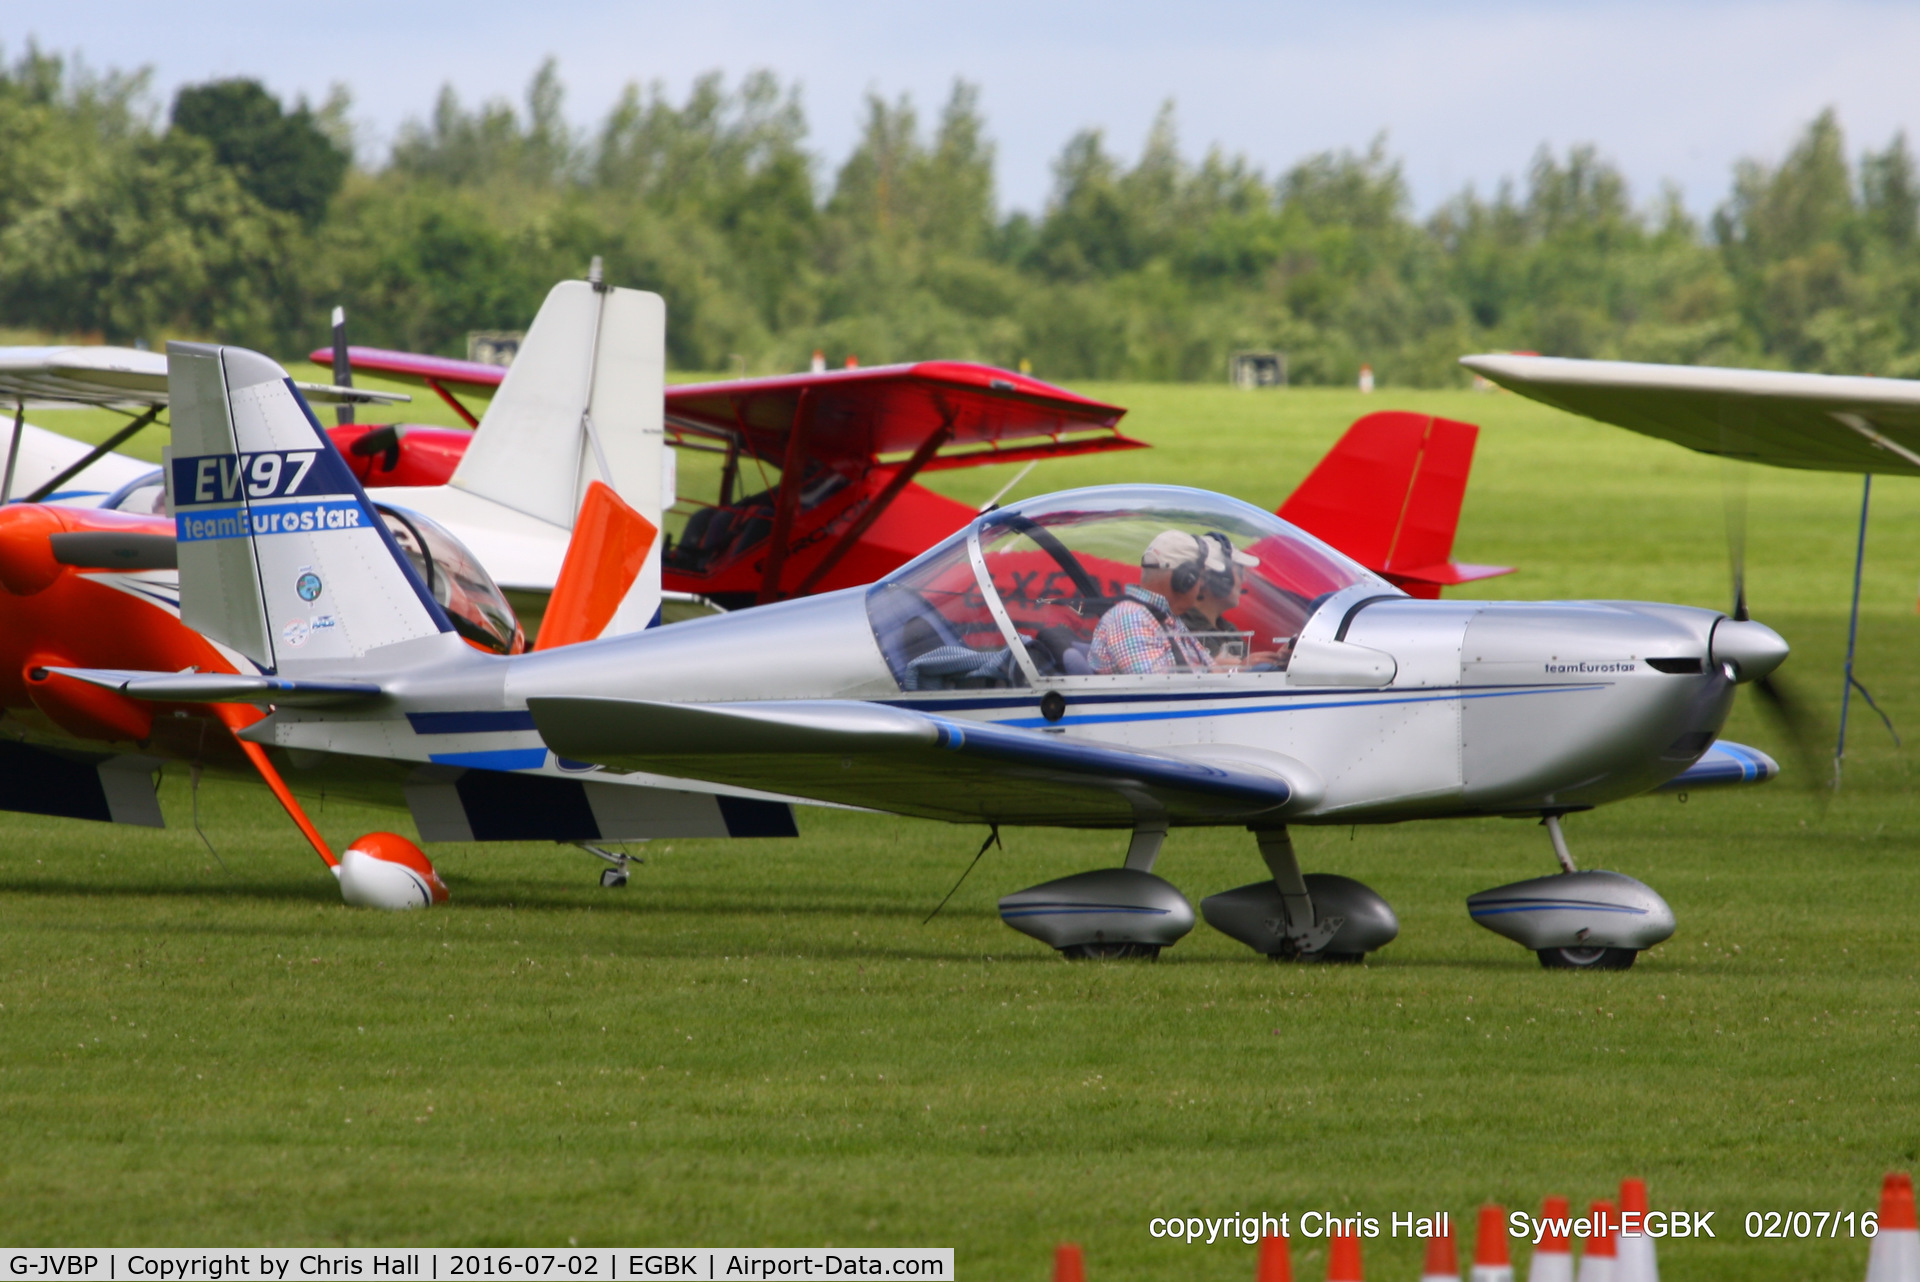 G-JVBP, 2006 Aerotechnik EV-97 TeamEurostar UK C/N 2730, at Aeroexpo 2016